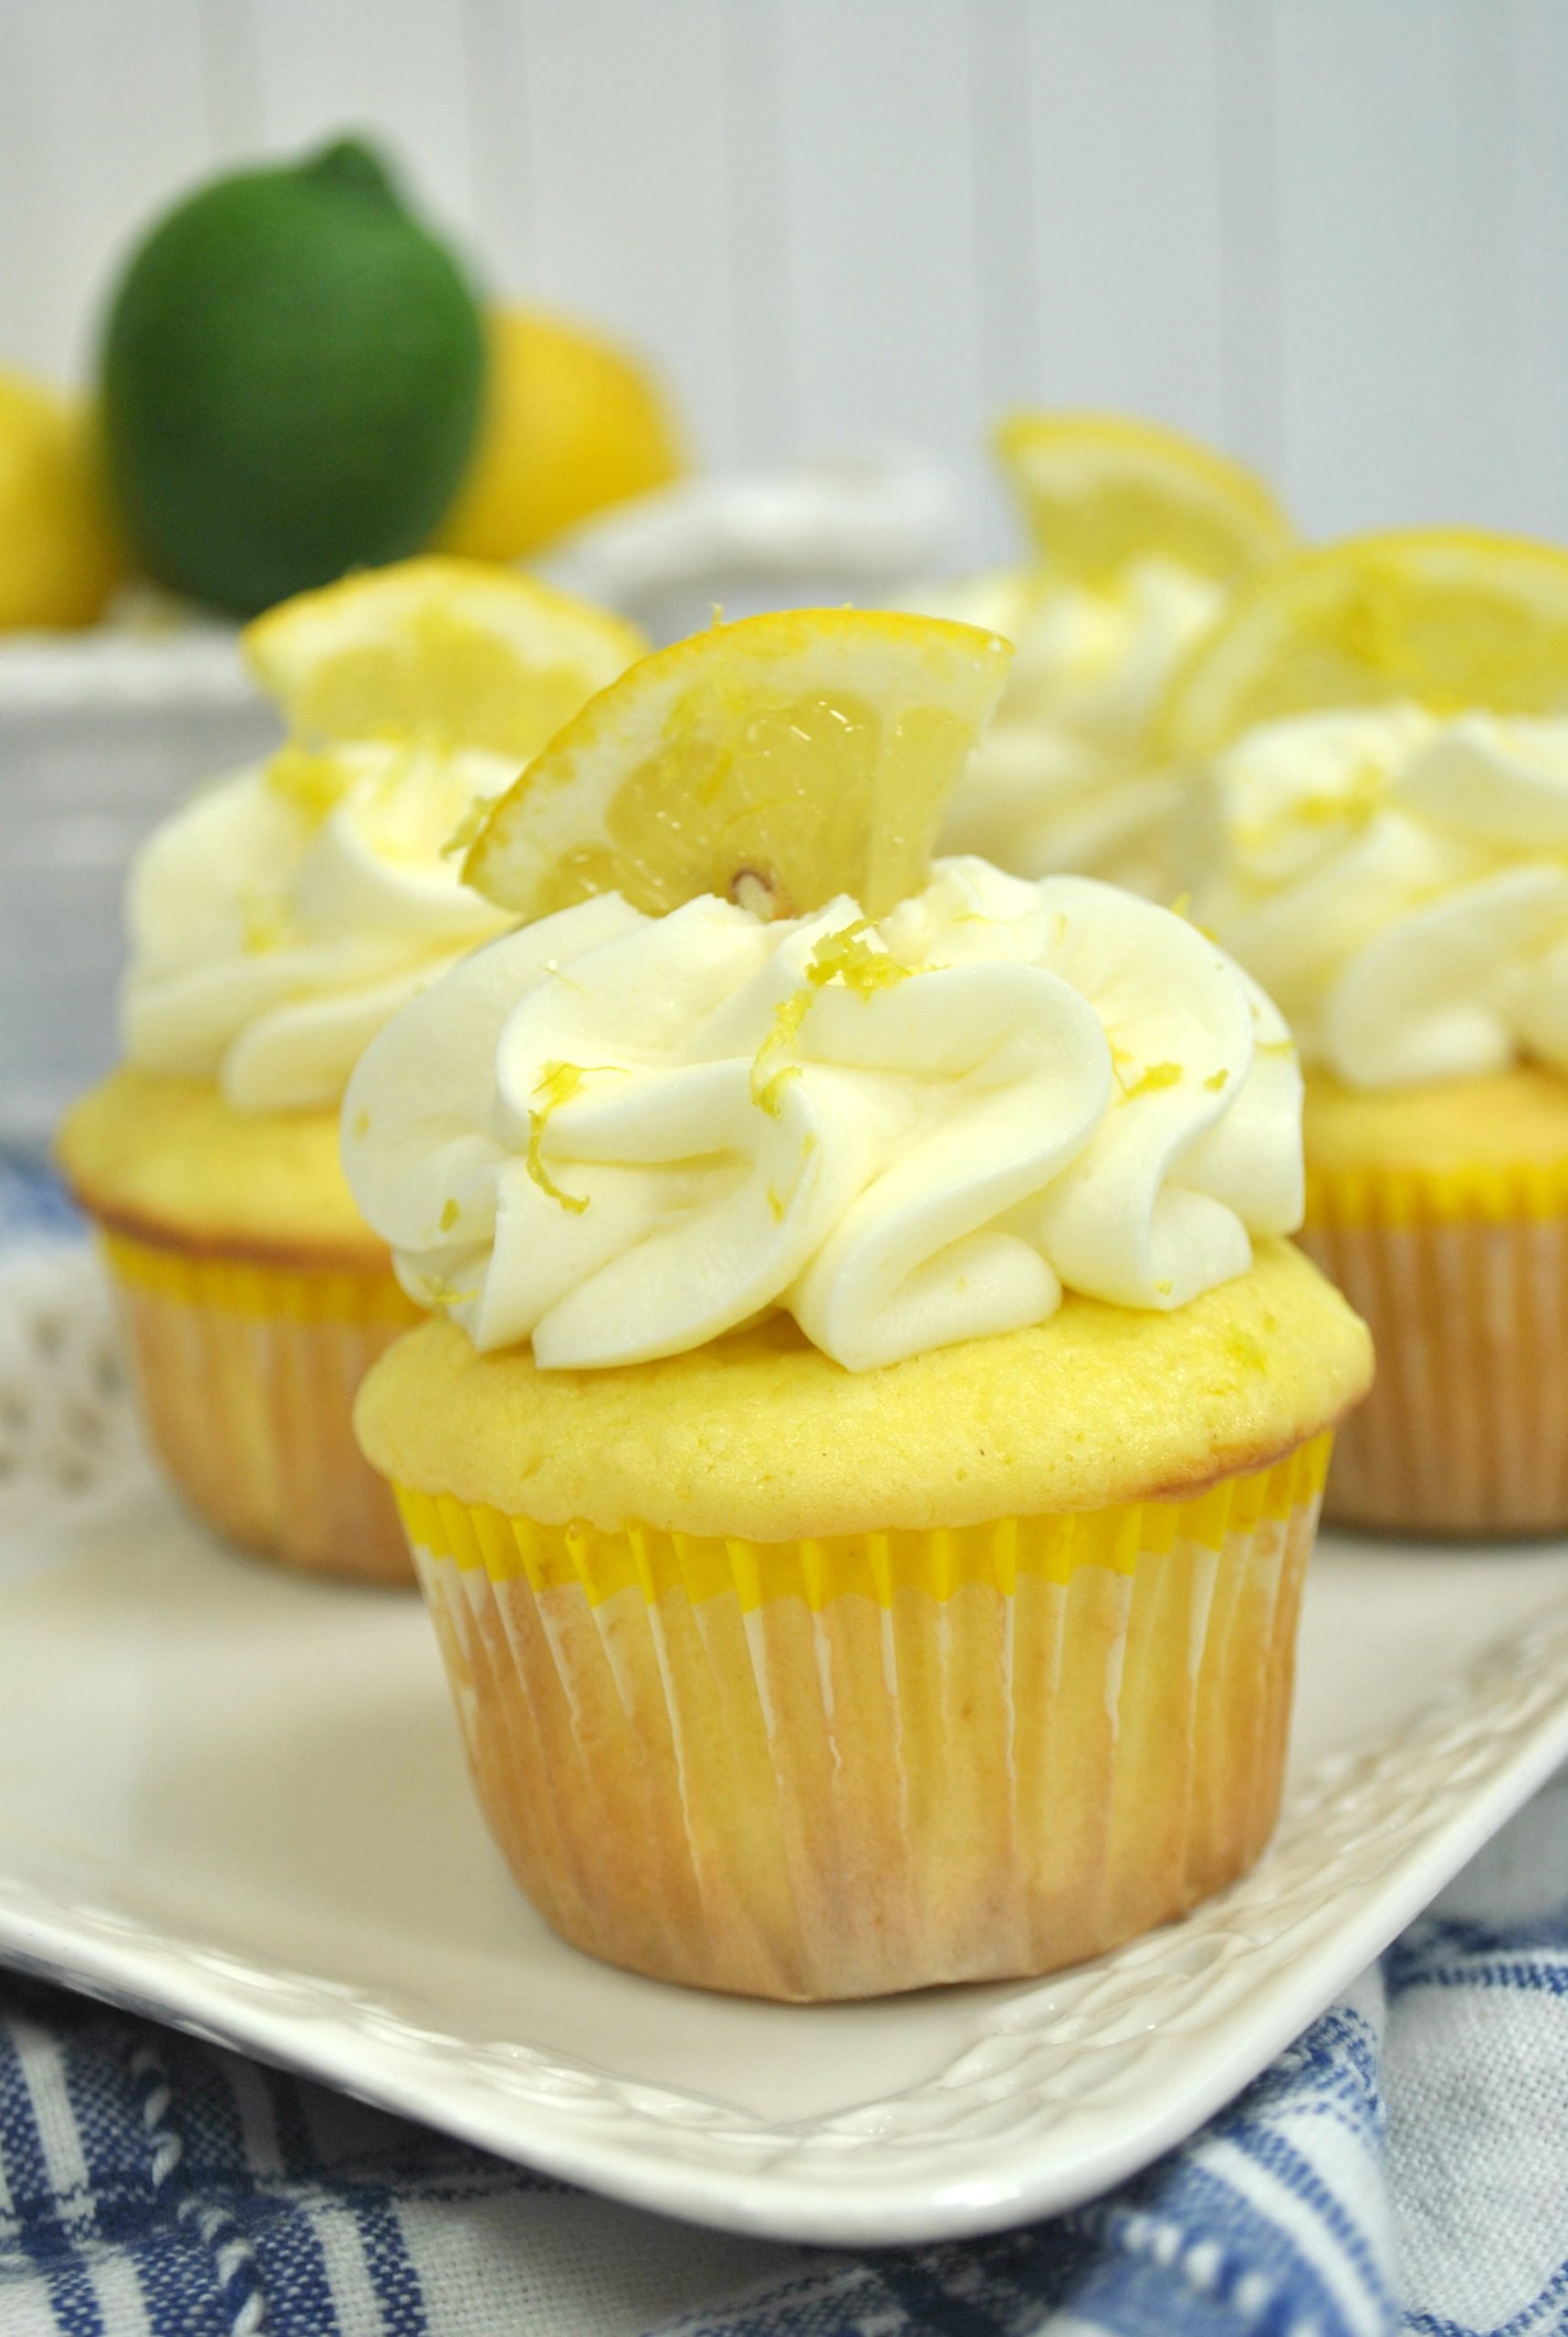 Lemonade Cupcakes from Scratch